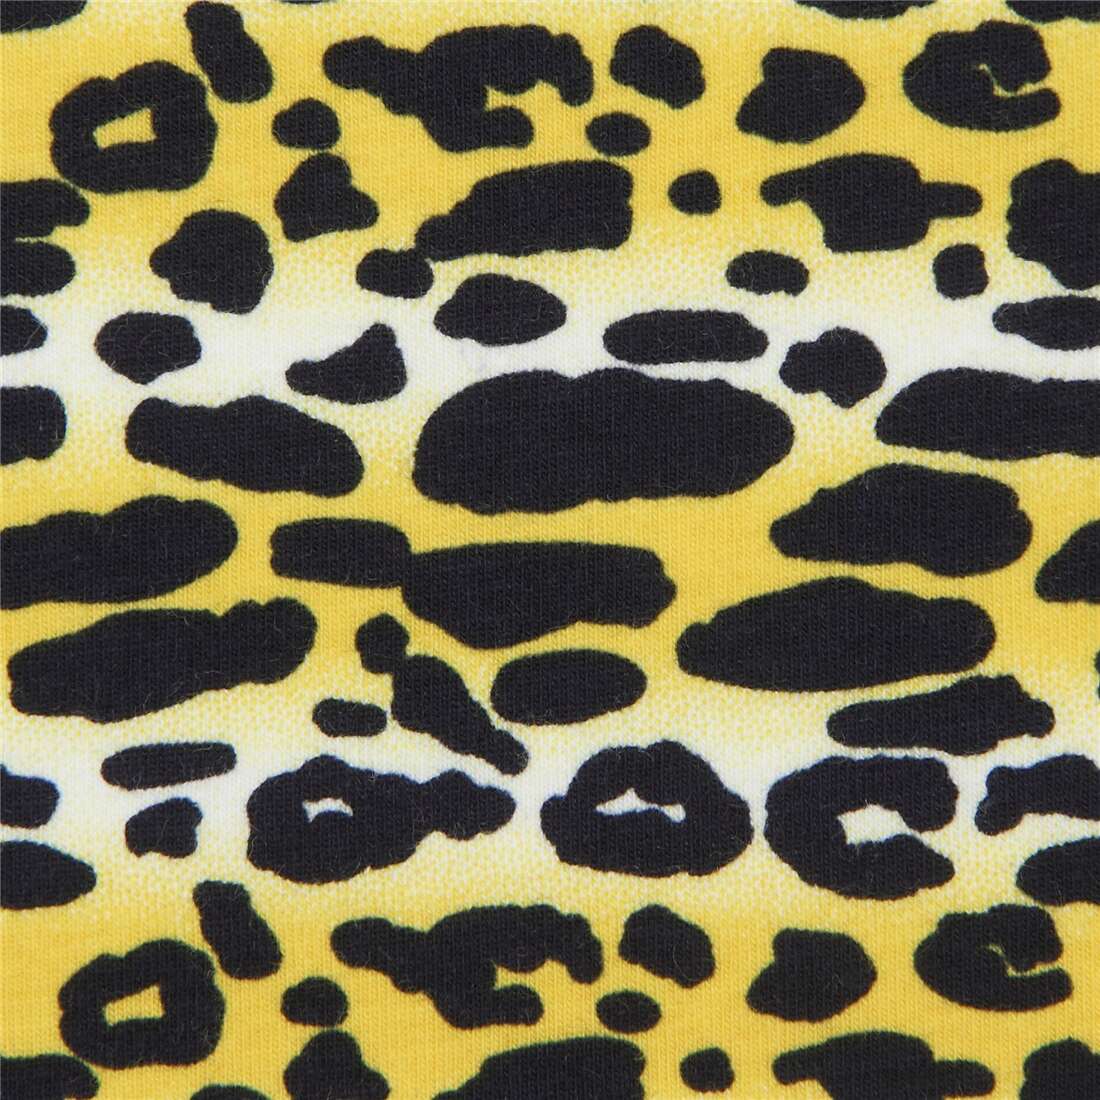 Leopard Print Stretch Fabric - Home Interior Design